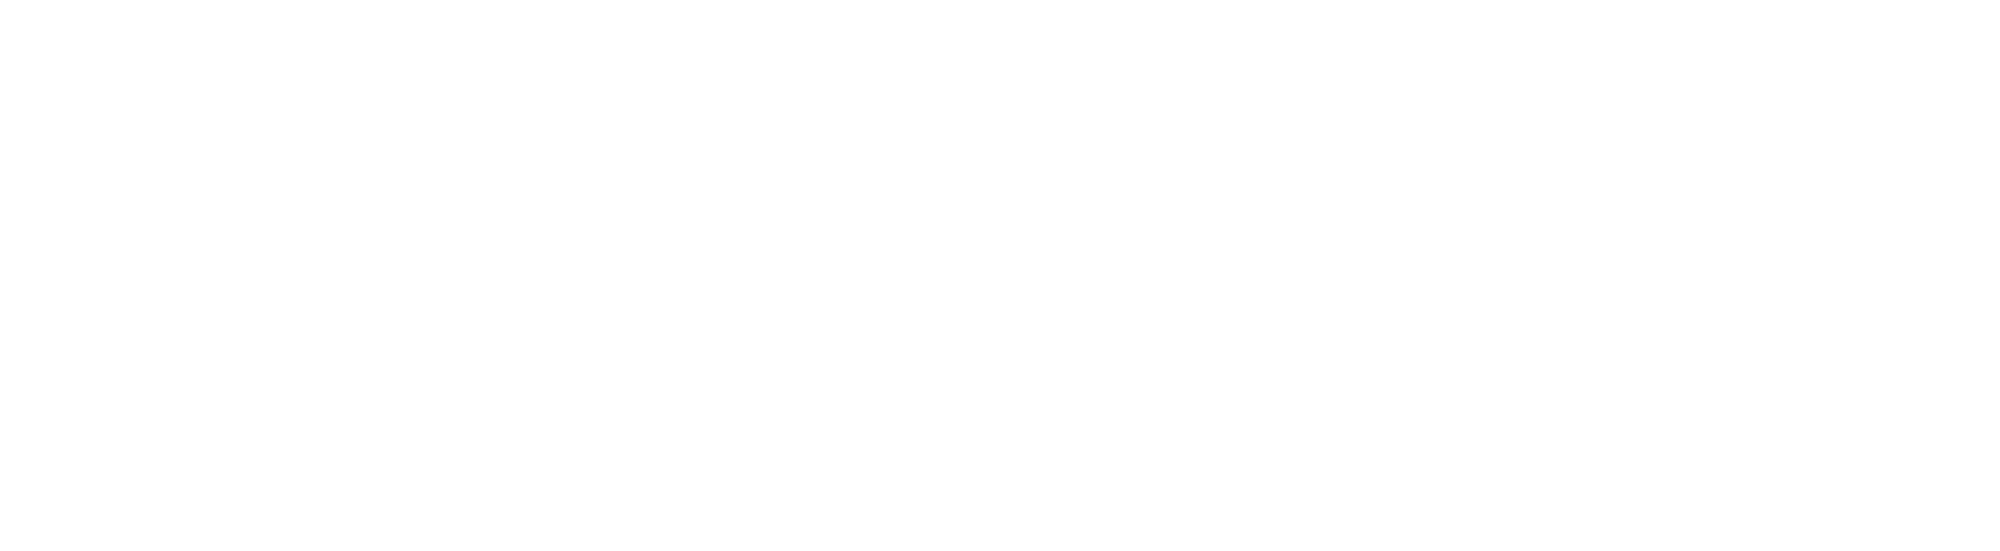 upsida-logo